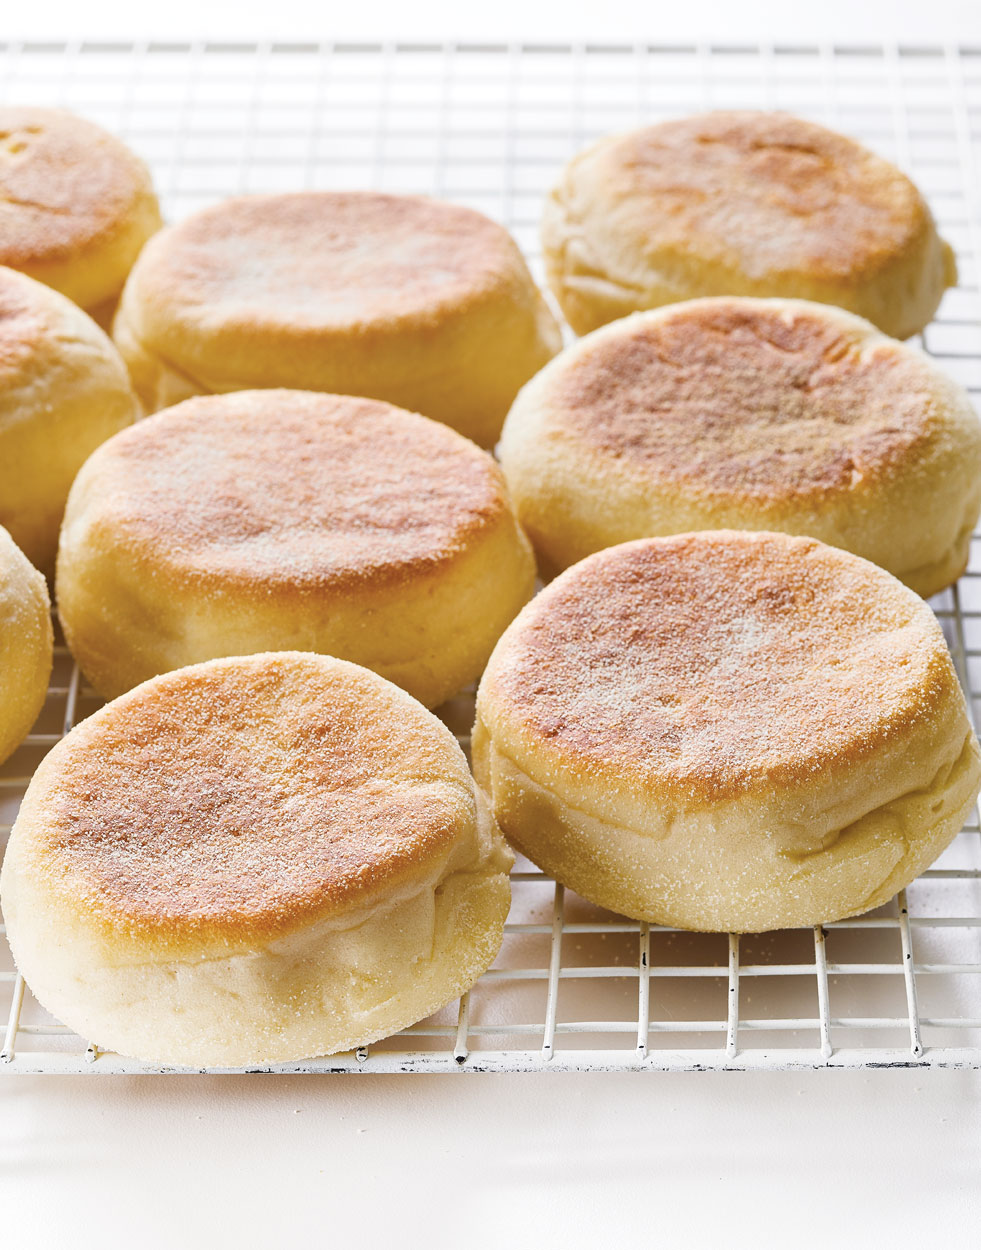 English muffin recipe